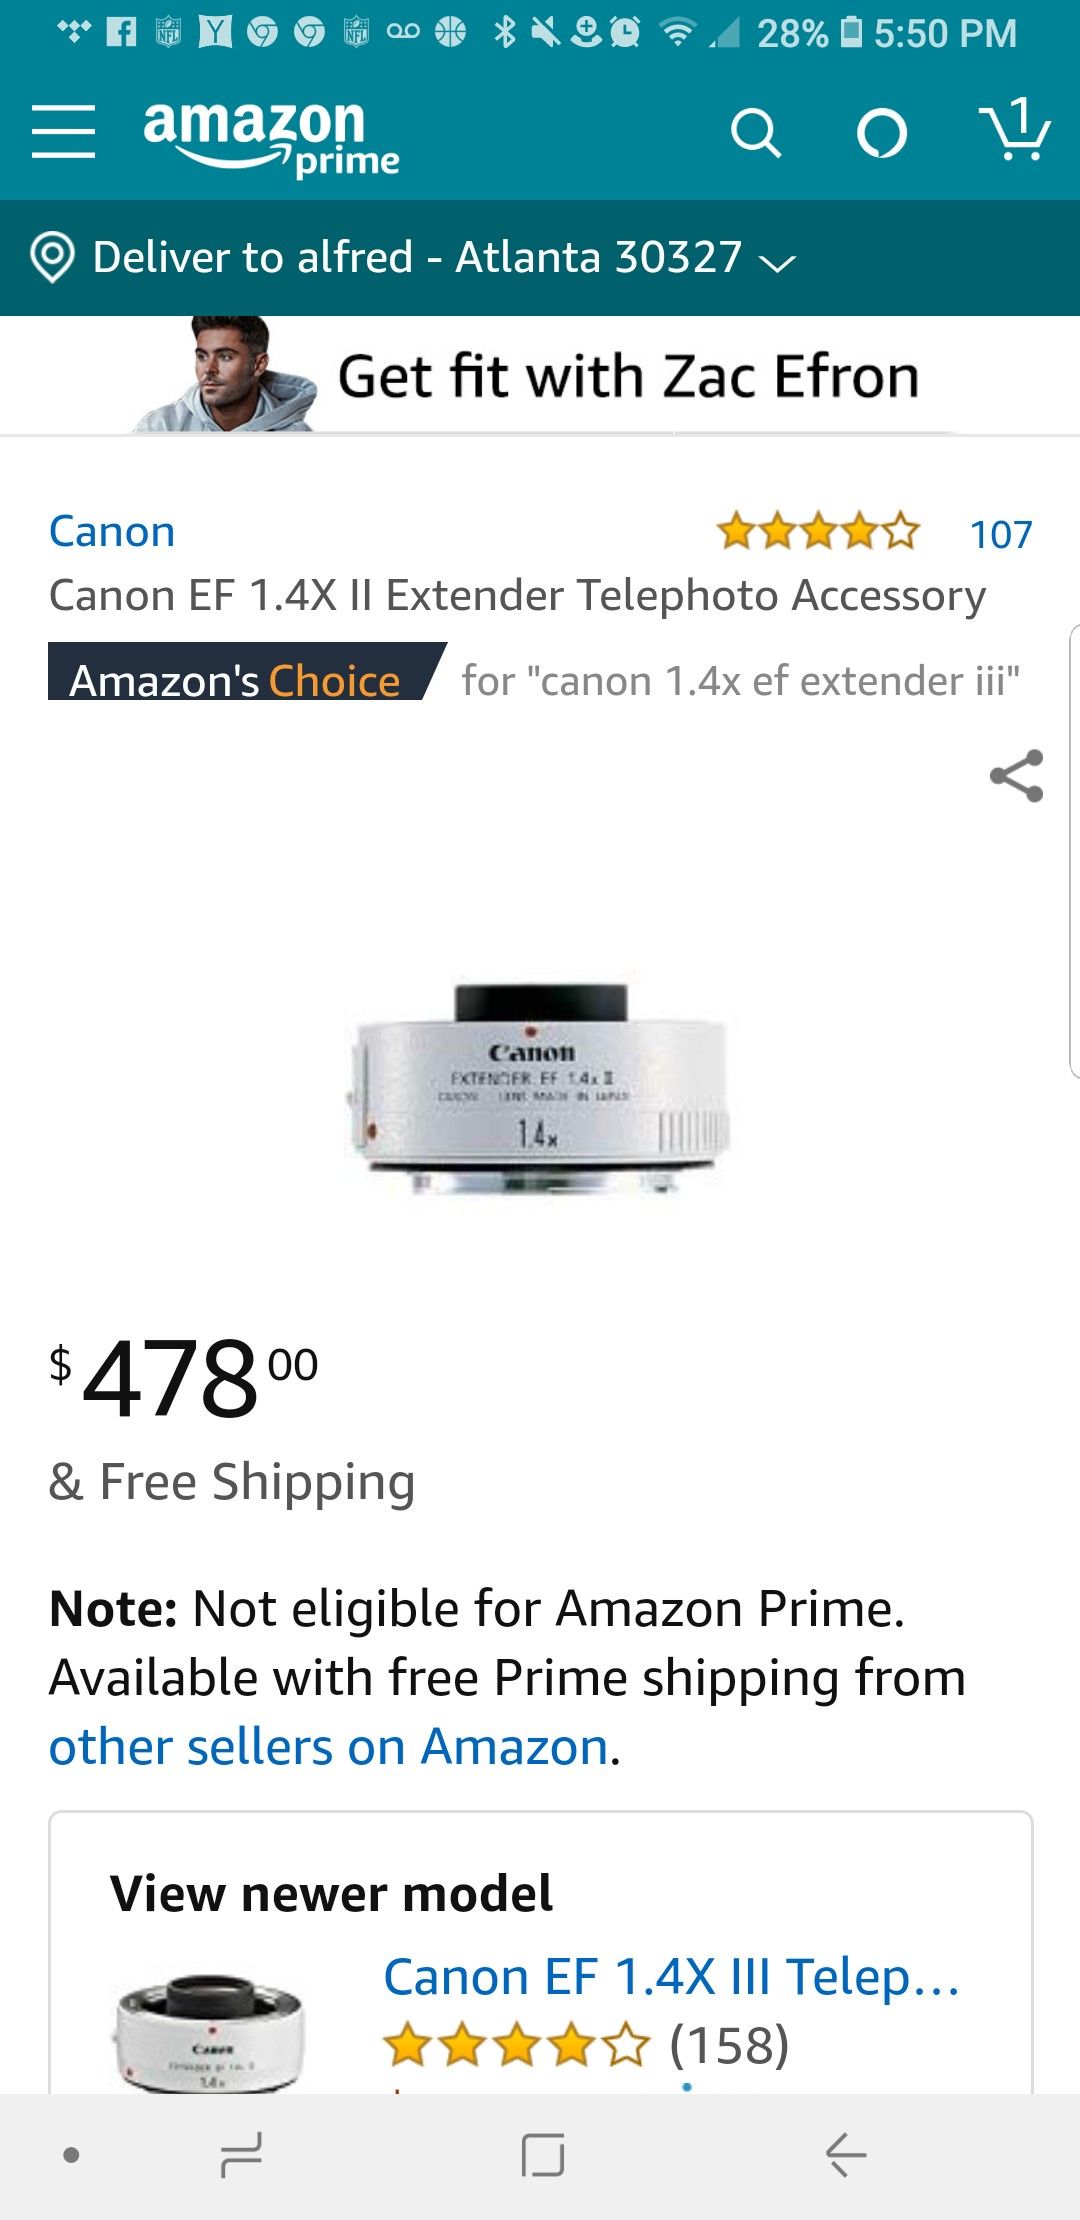 Canon extender 1.4 ll